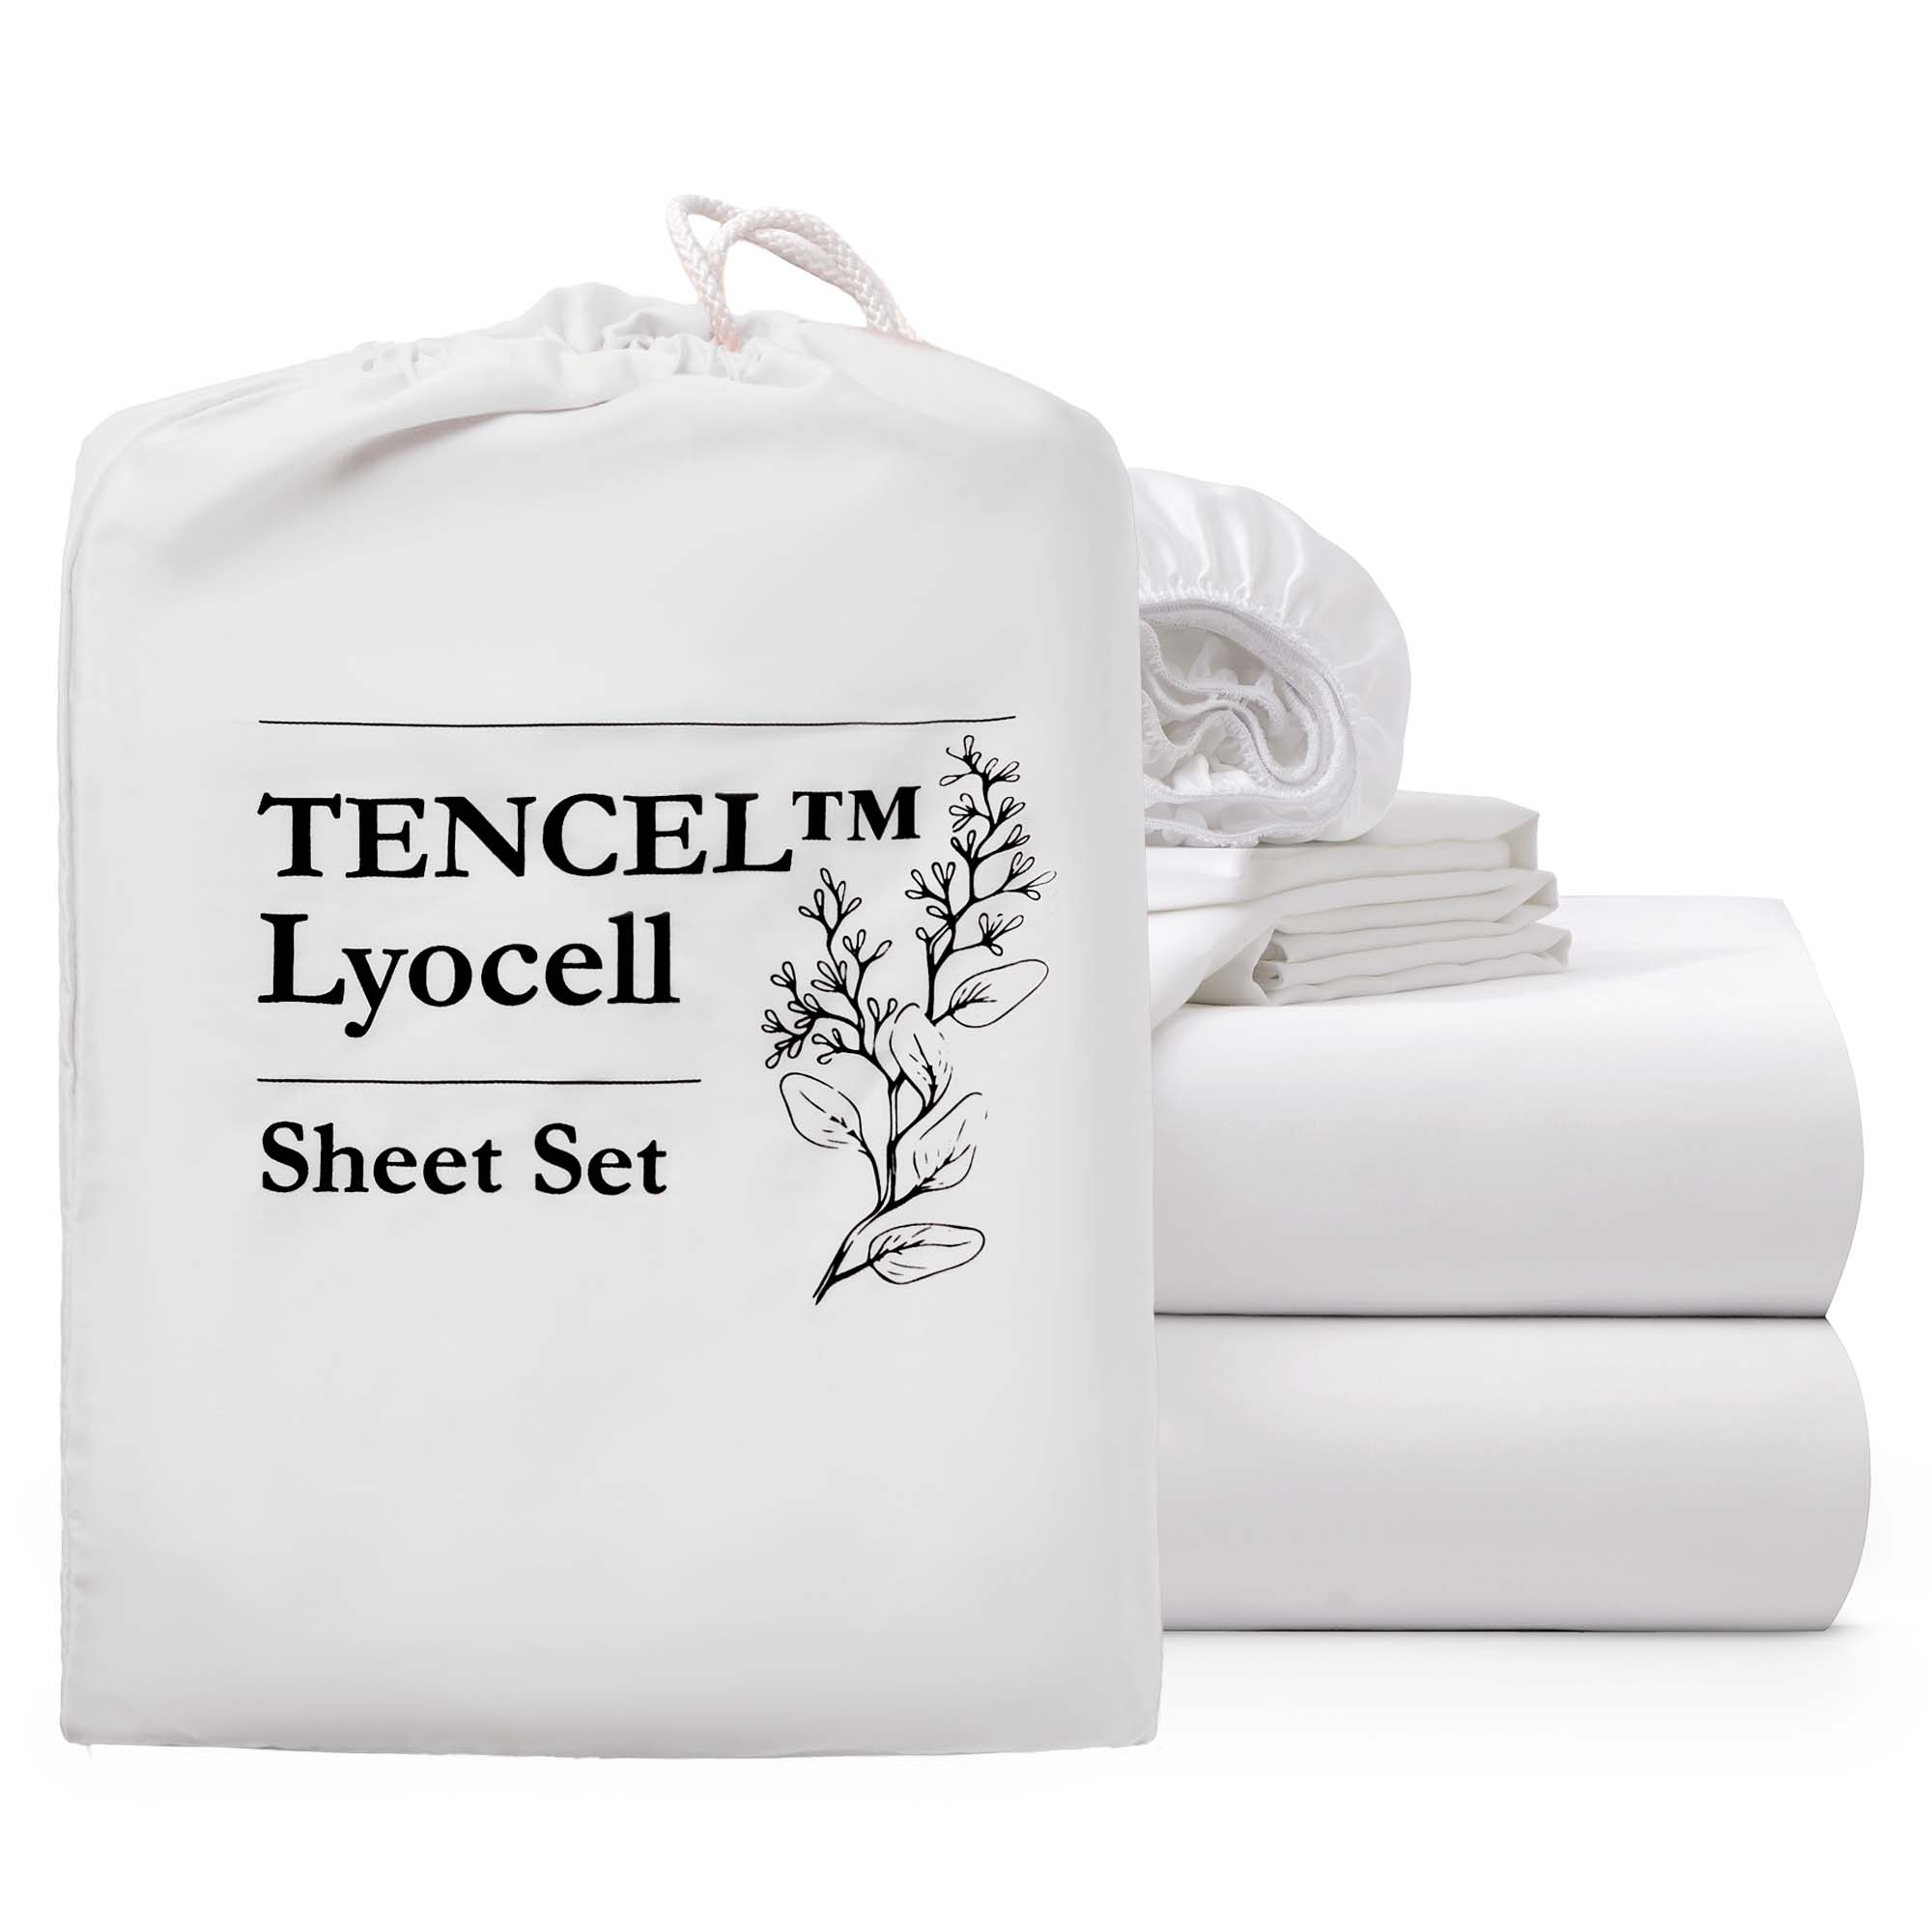 Silky Soft TENCELâ¢ Lyocell Cooling Sheet Set-Breathability And Moisture-wicking Bedding Set - Misty Blue, King